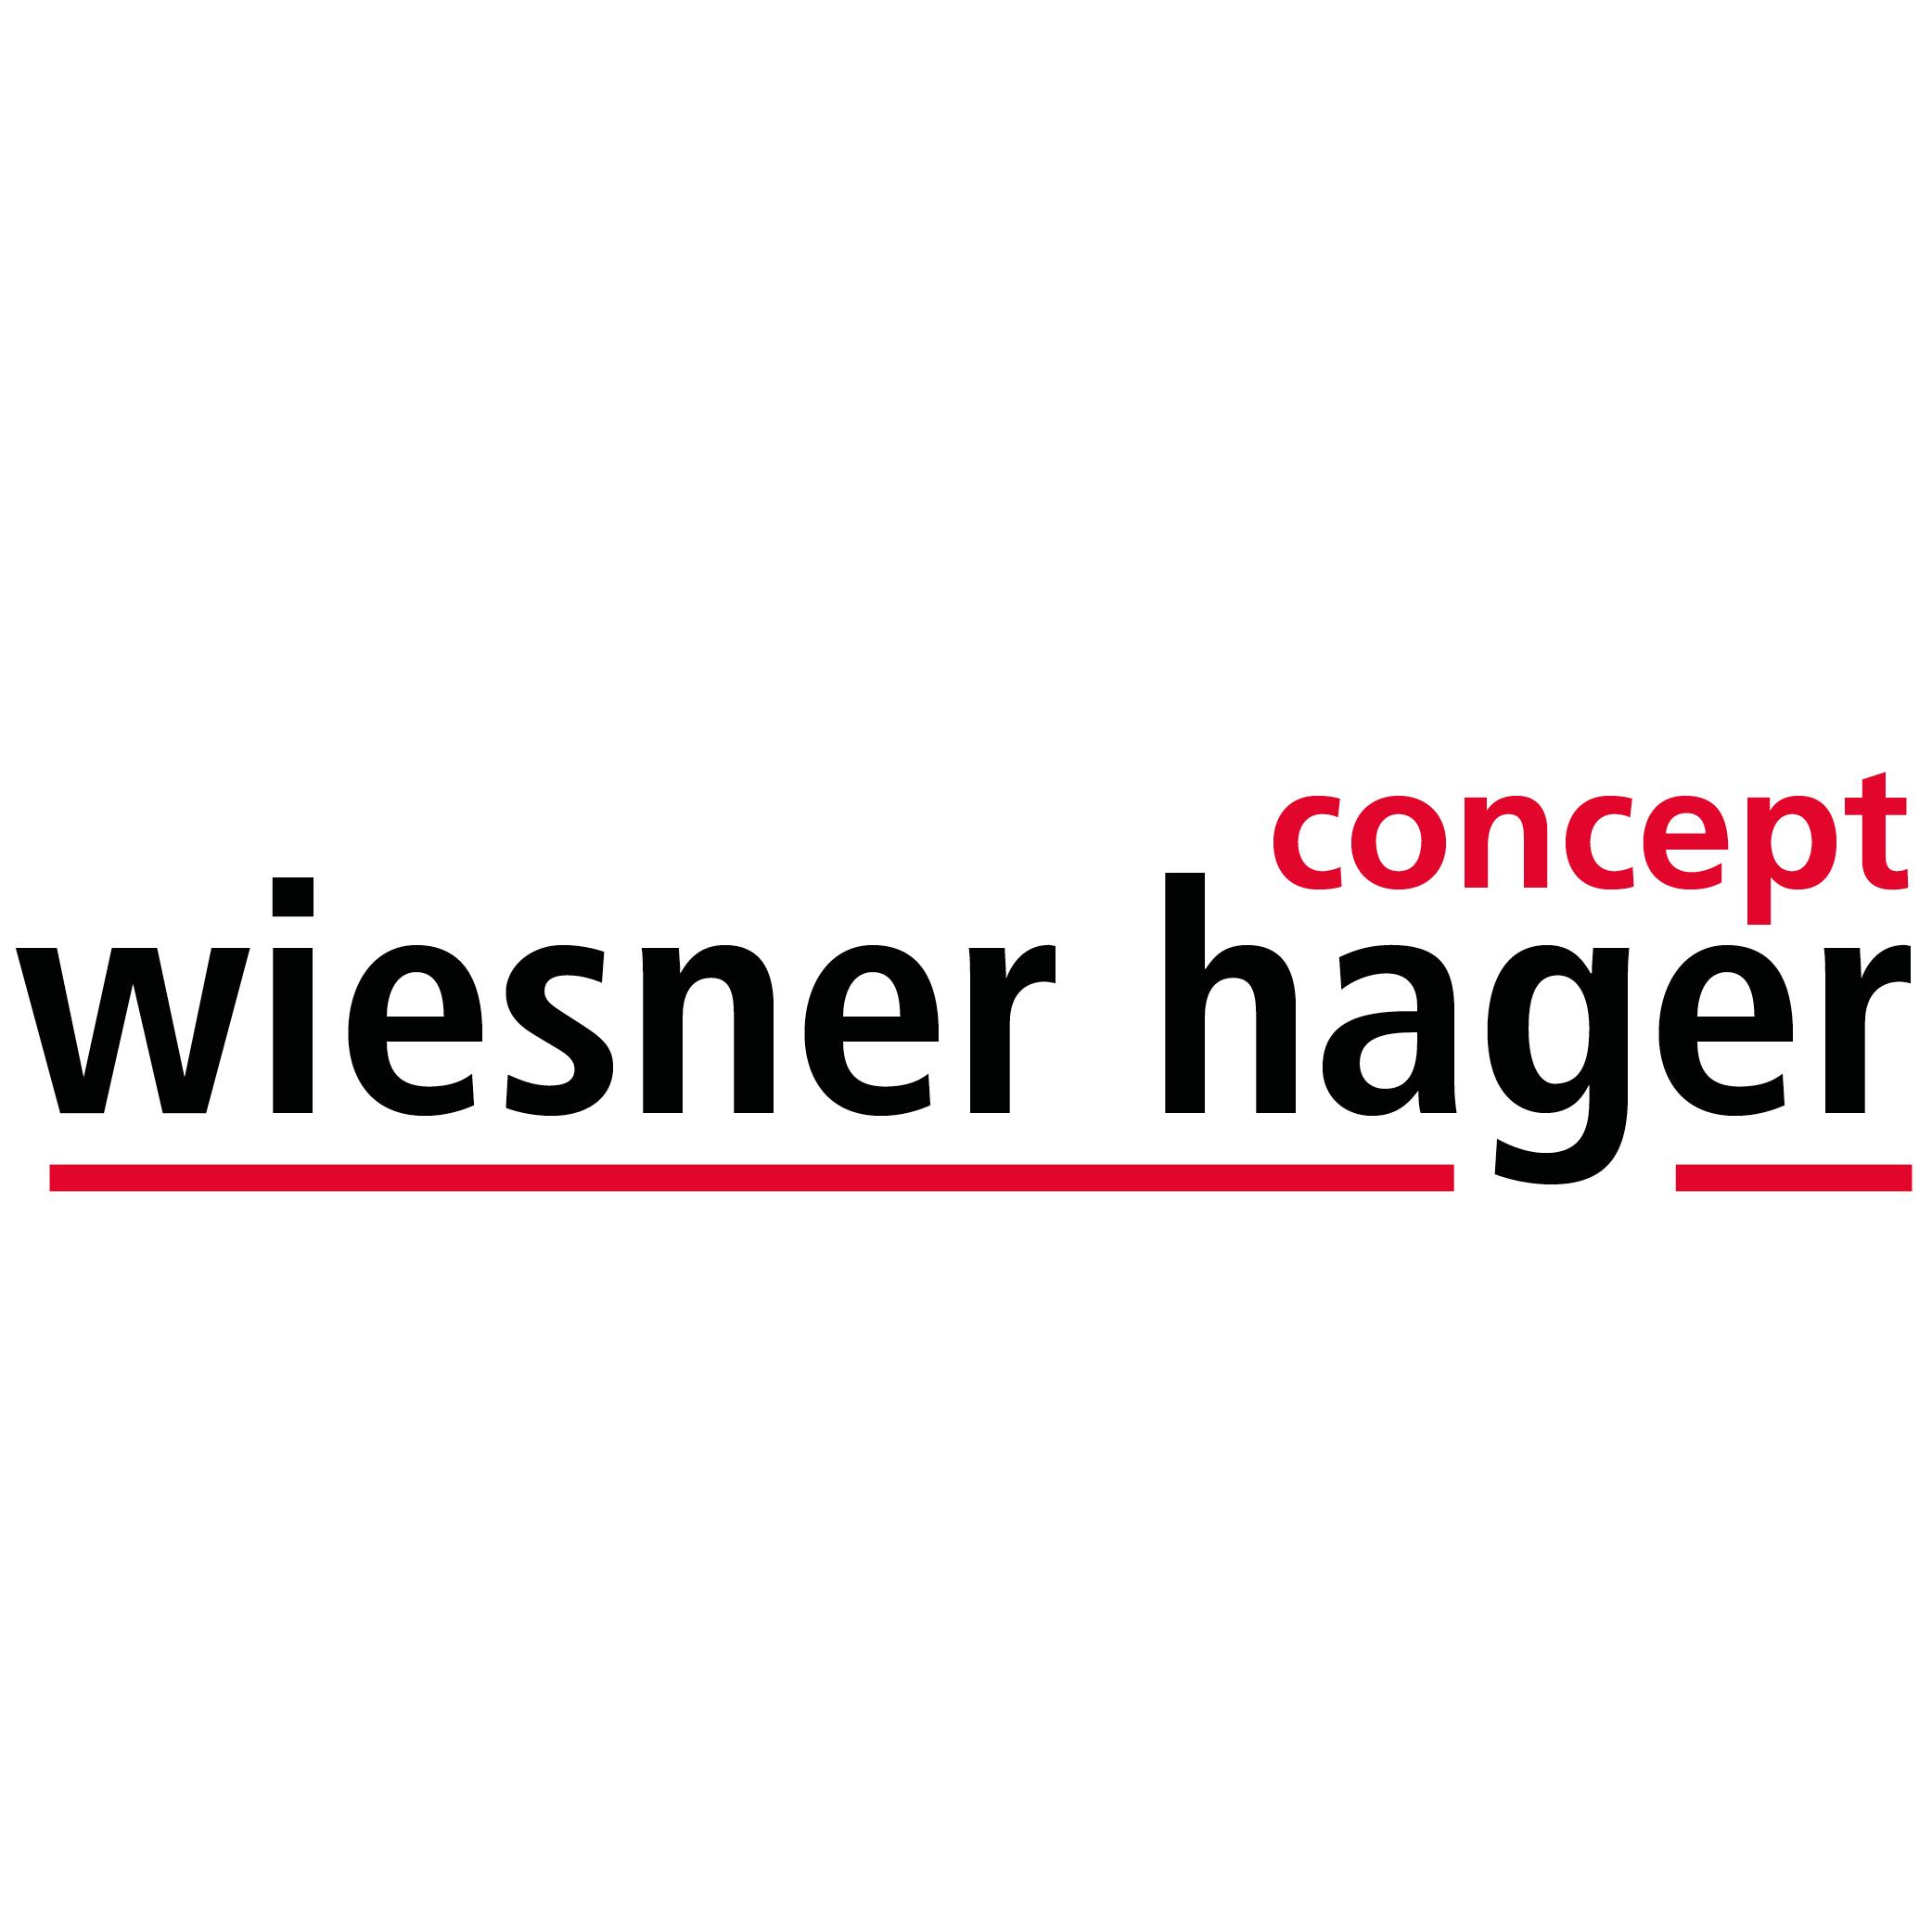 Wiesner-Hager Möbel GmbH